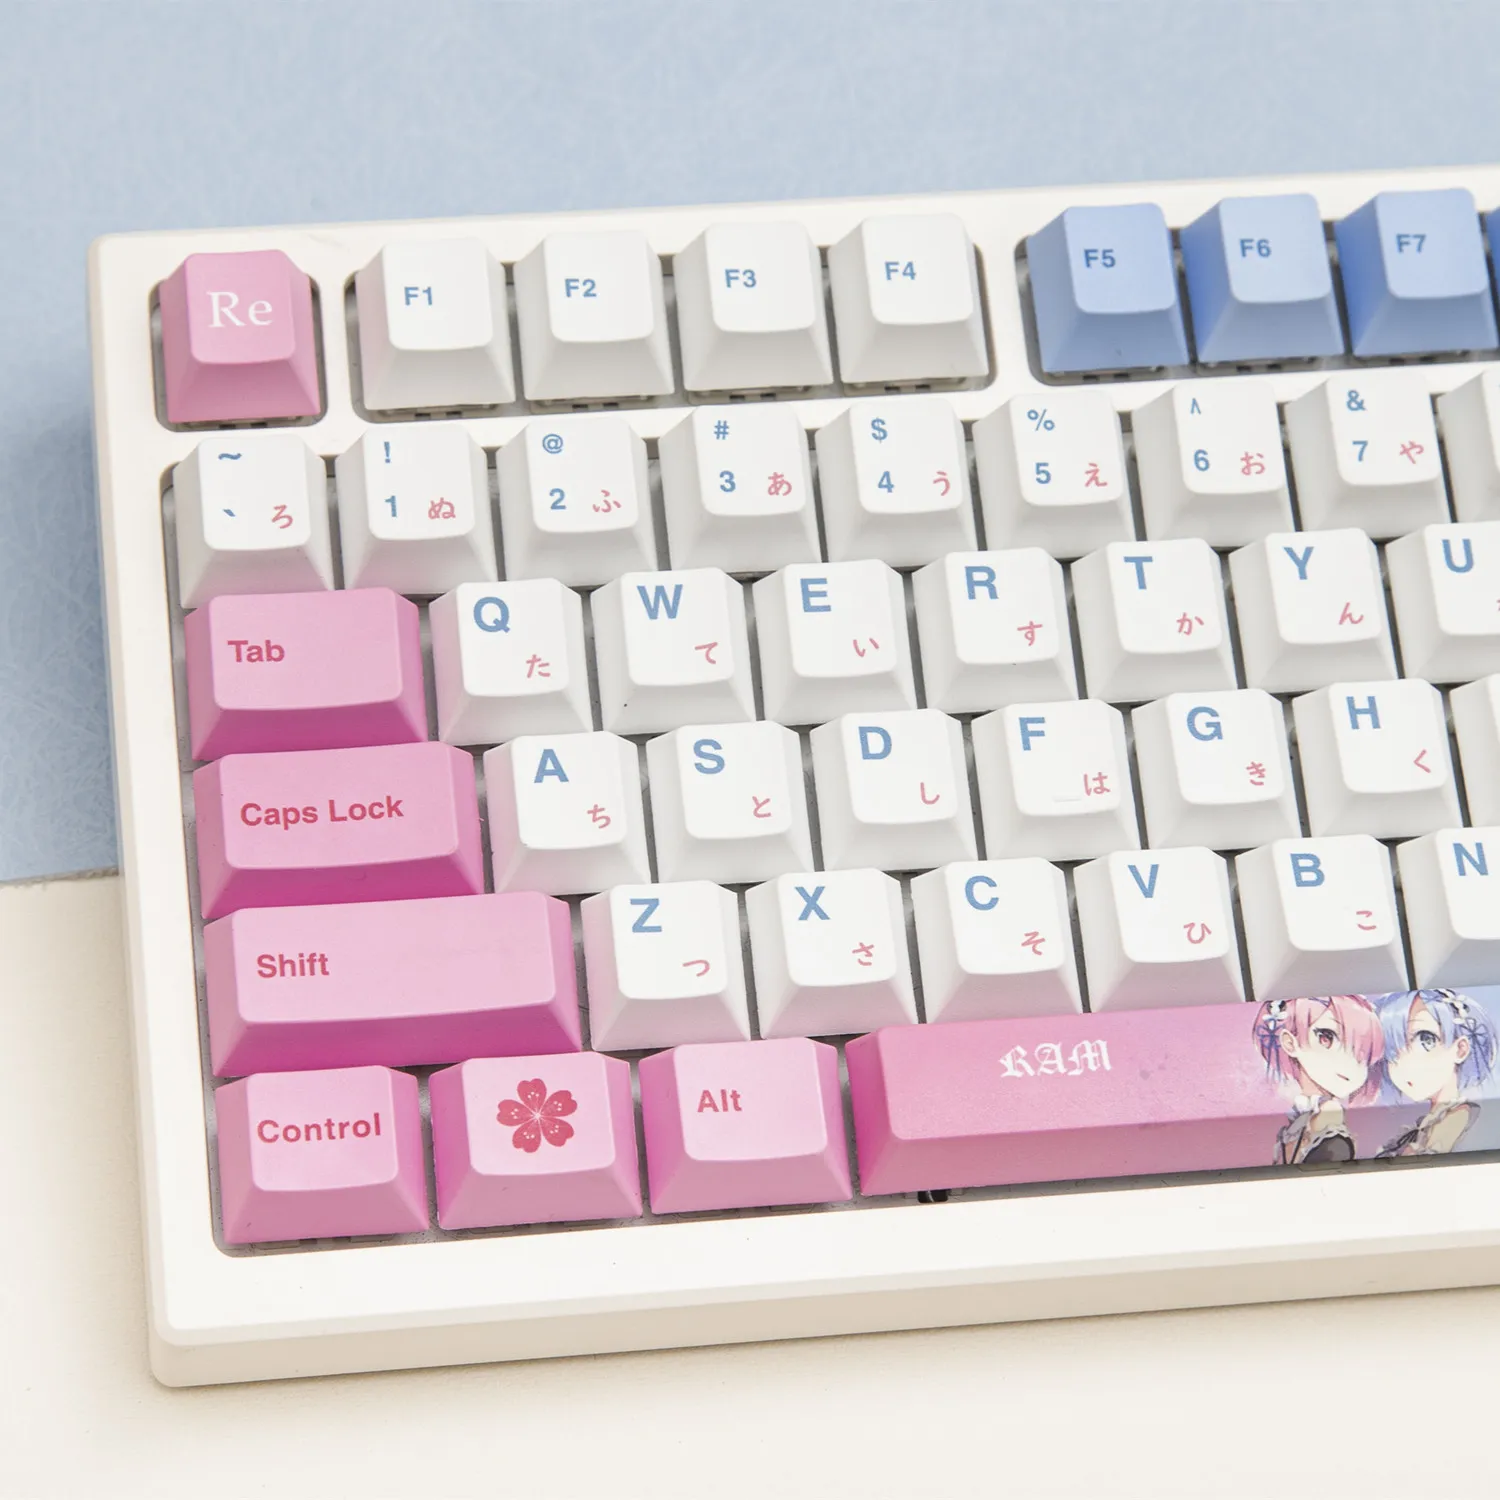 

141 Keys Cherry Profile Dye Sublimation Personalized Japanese Anime Cherry Keycaps For 61 64 68 87 96 104 Keyboard MX Switchs